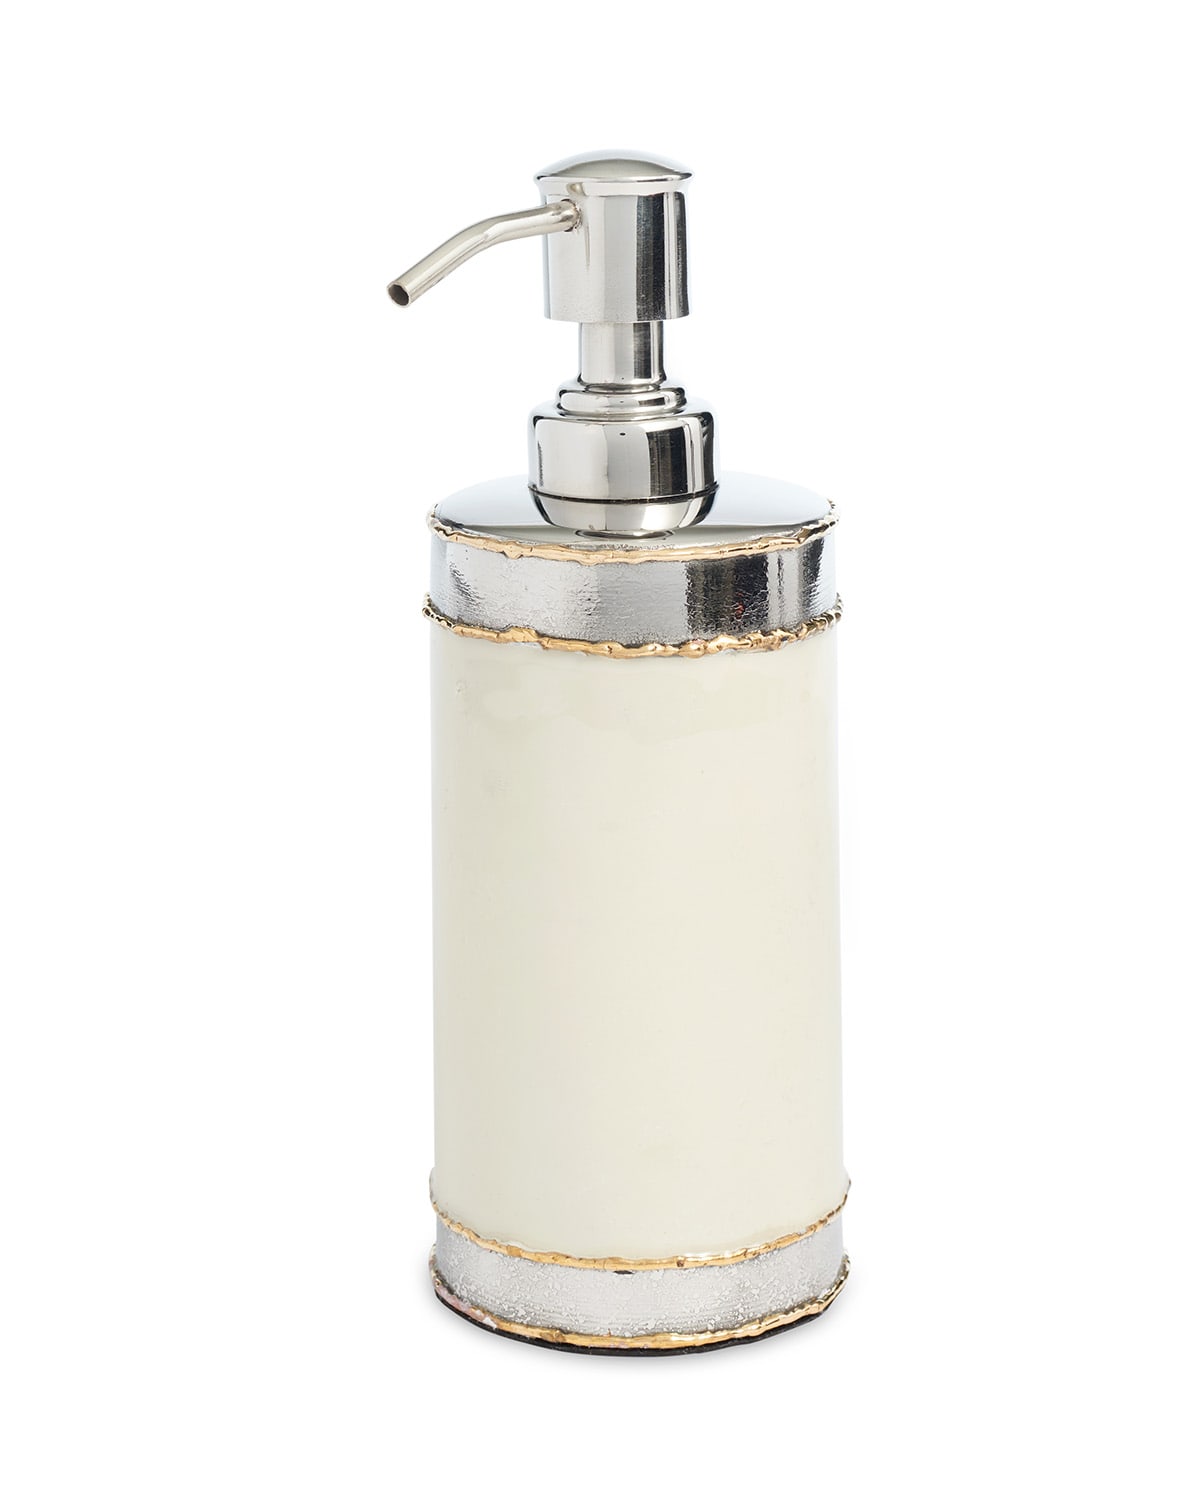 Image Julia Knight Cascade 7.5" Soap/Lotion Dispenser